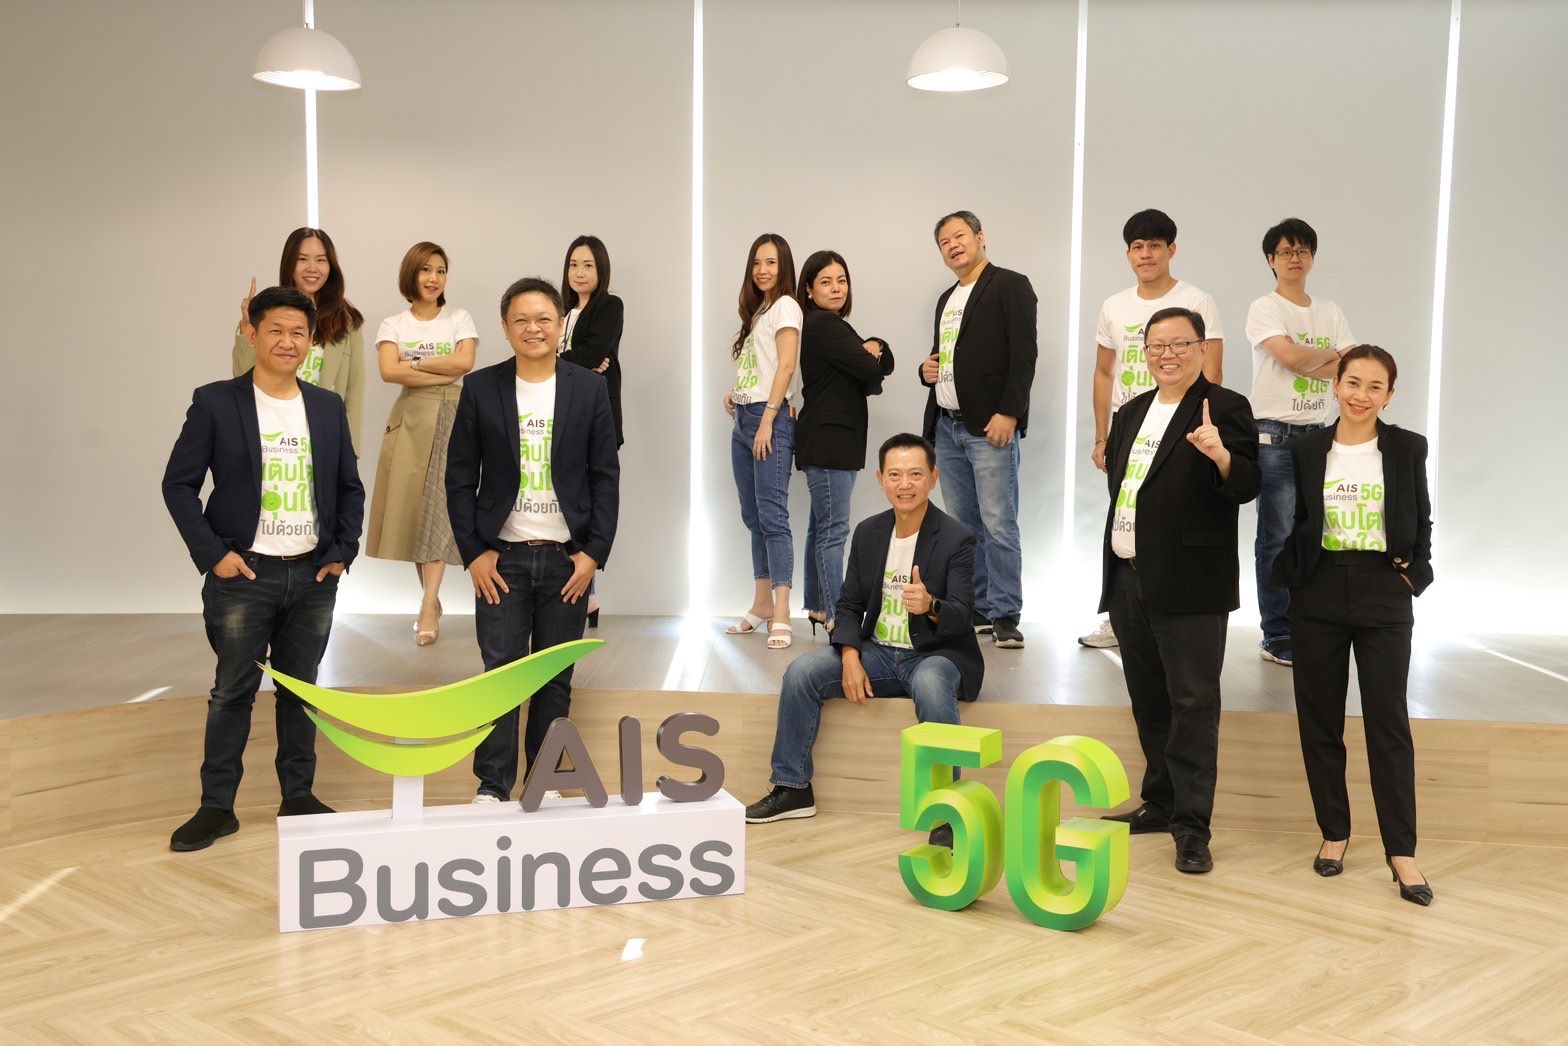 AIS Business ย้ำผู้นำปี 66 ด้านดิจิทัลและไอซีที สำหรับองค์กรและธุรกิจไทย ด้วยโครงข่าย 5G ดาต้าและคลาวด์ เพื่อเป็นดิจิทัลพาร์ทเนอร์อันดับ 1